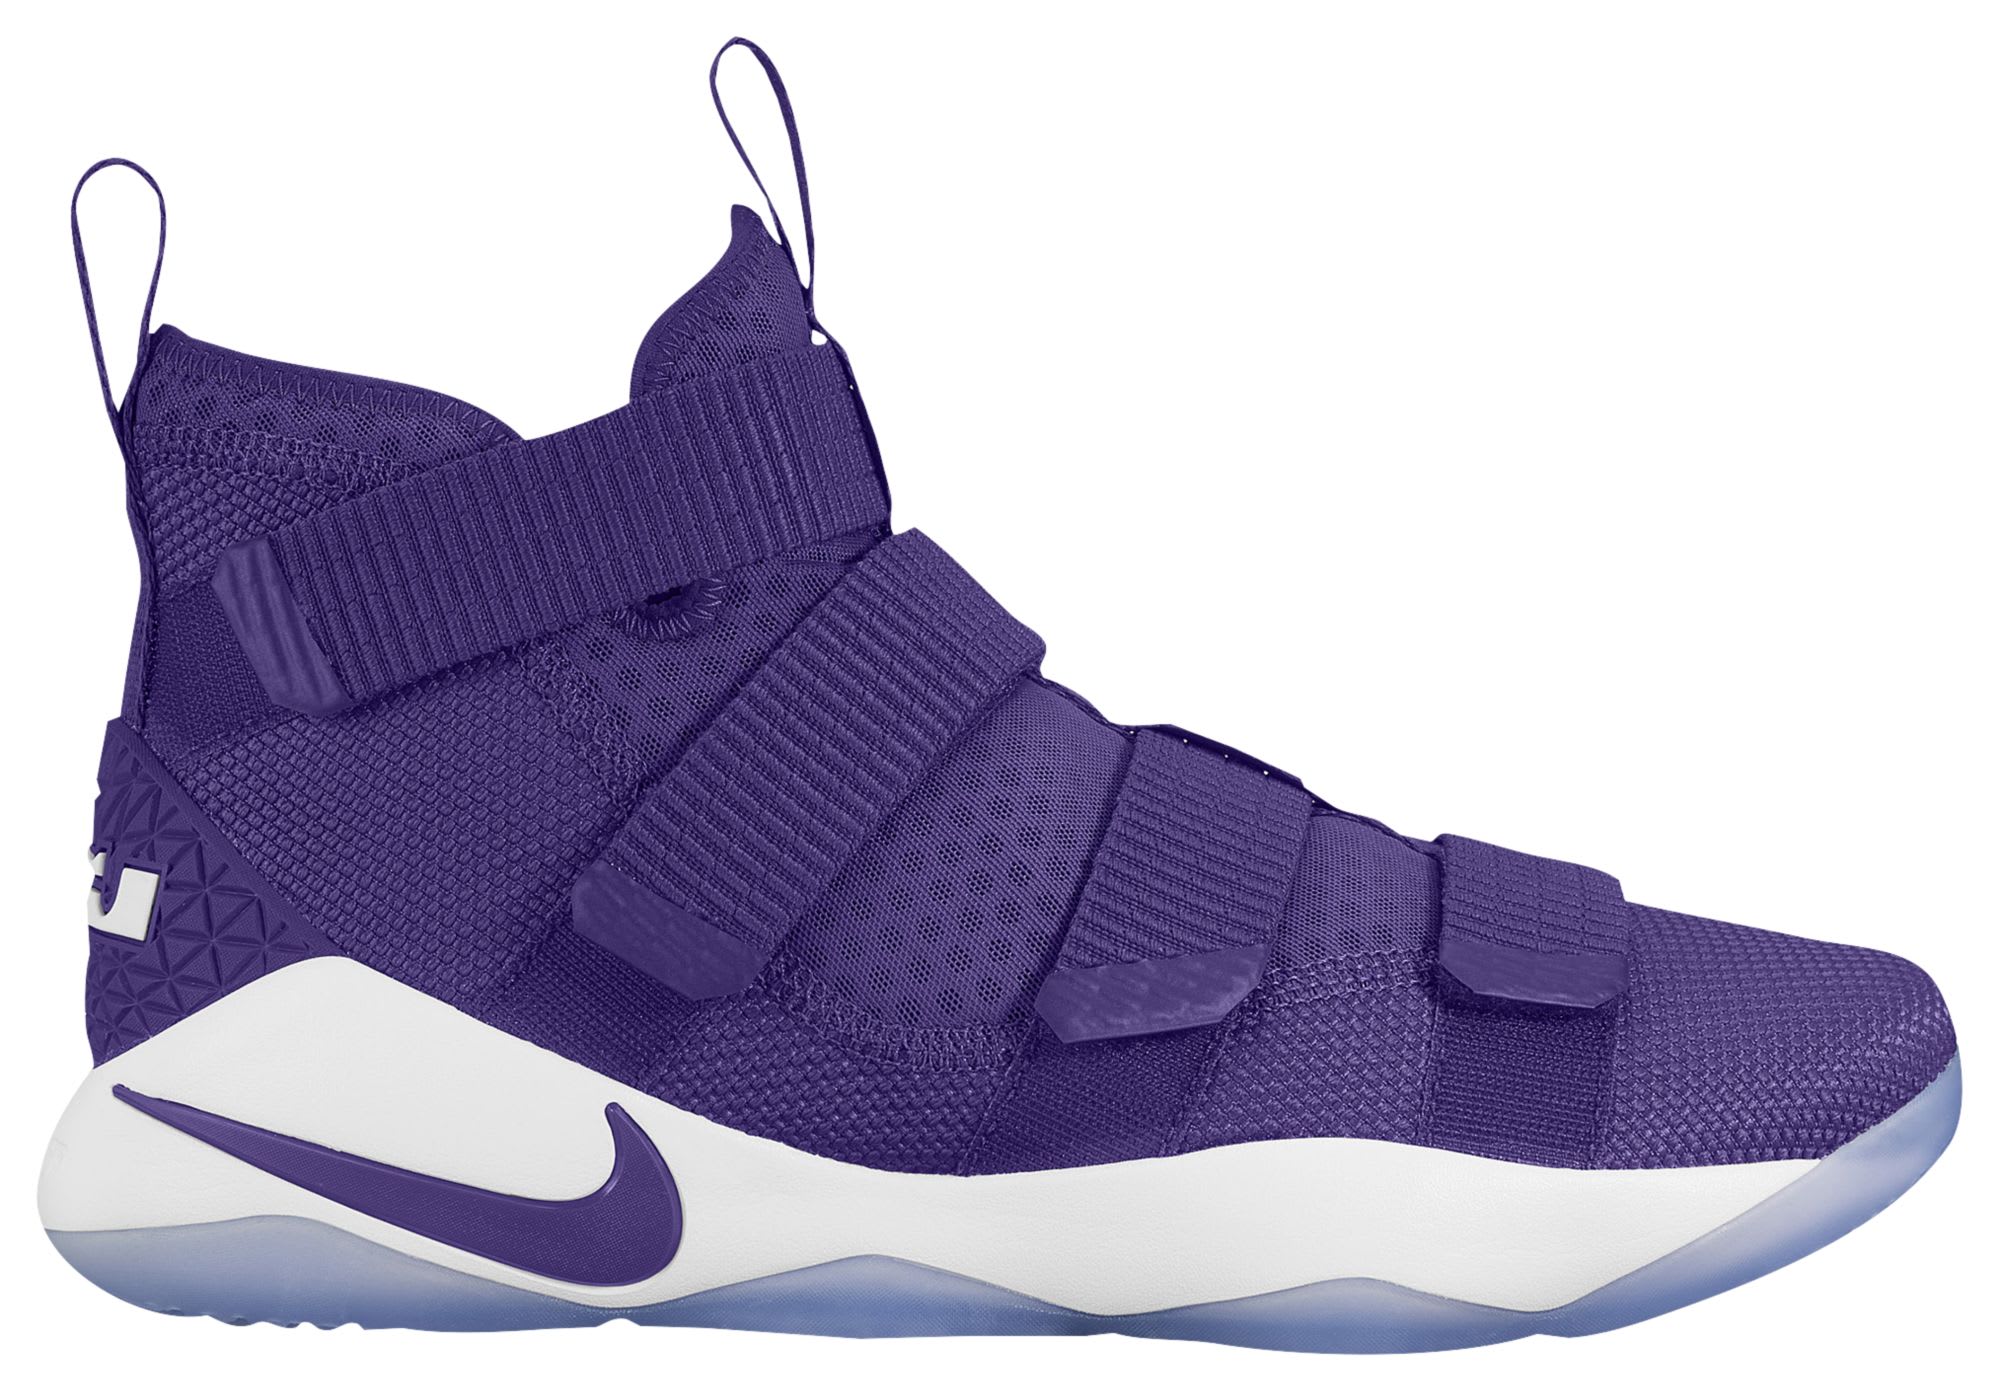 Nike LeBron Soldier 11 TB Purple